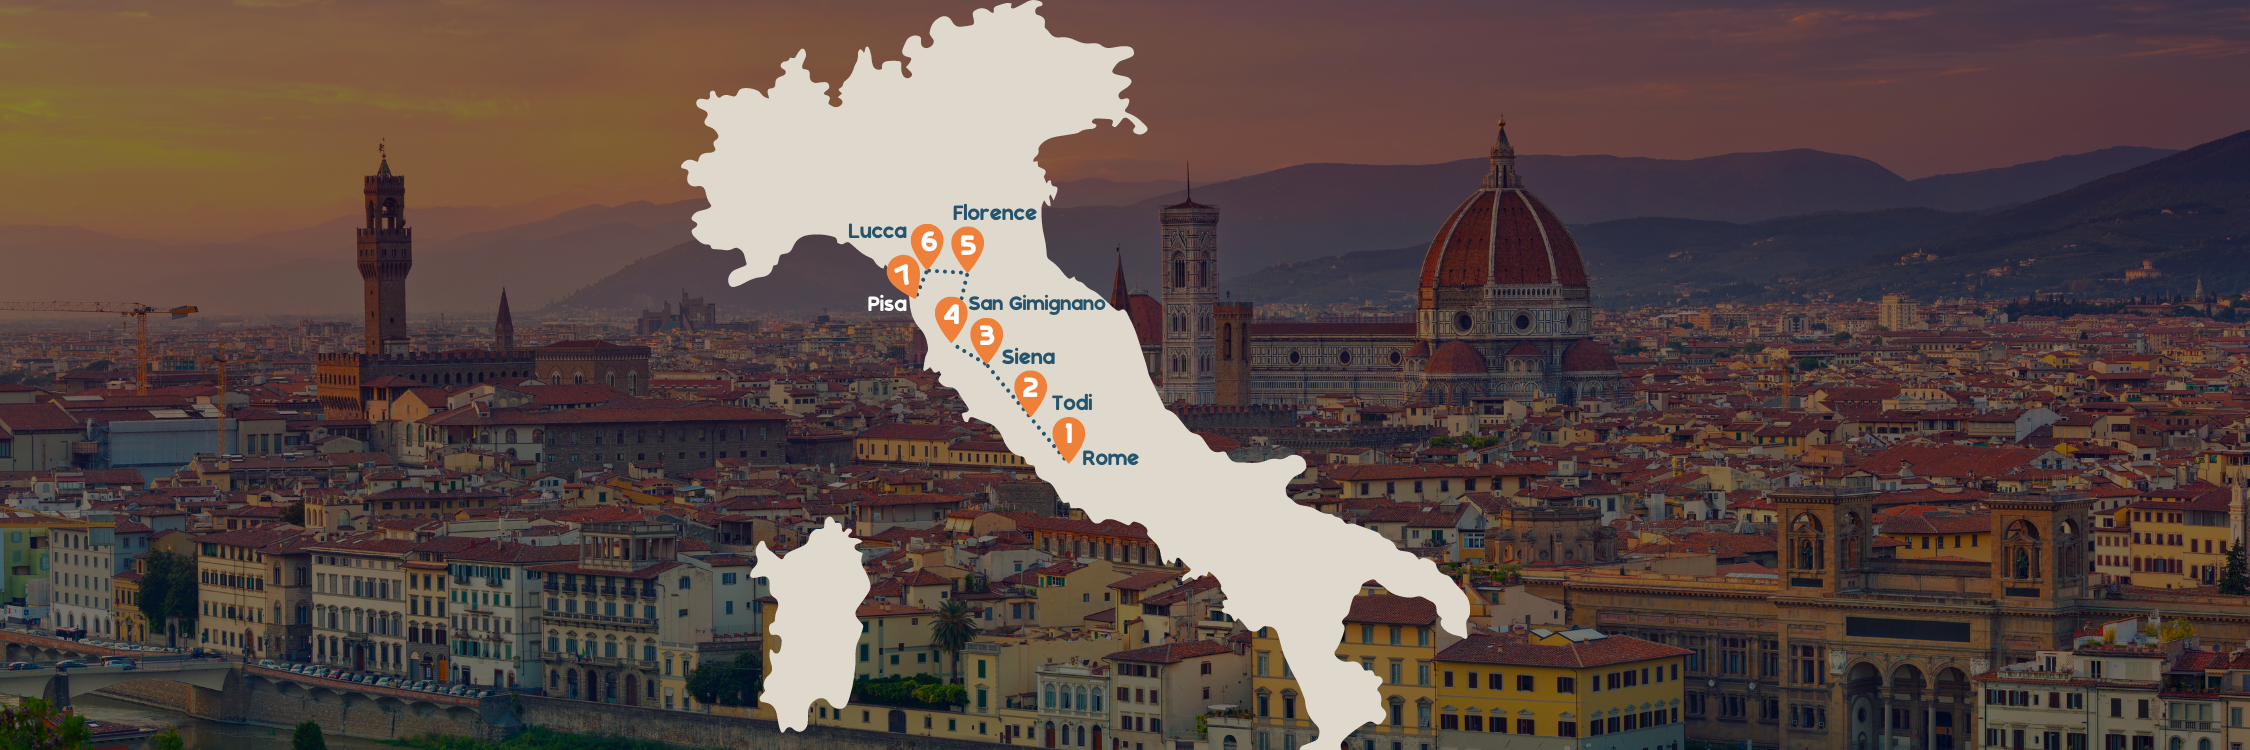 Midden Italië kaart